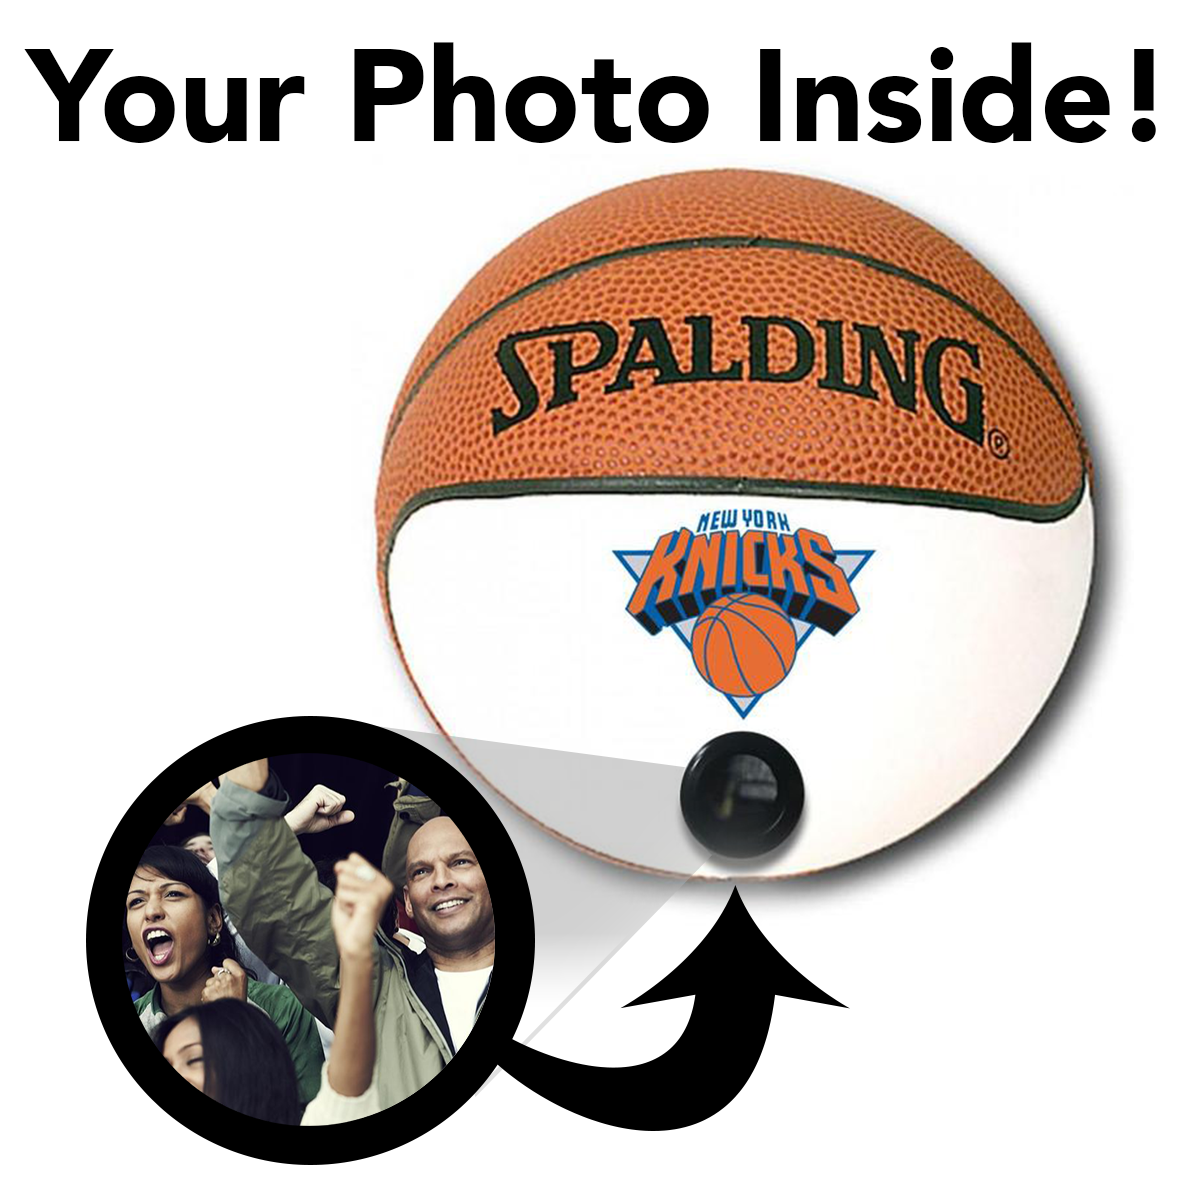 Knicks NBA Collectible Miniature Basketball - Picture Inside - FANZ Collectibles - Fanz Collectibles